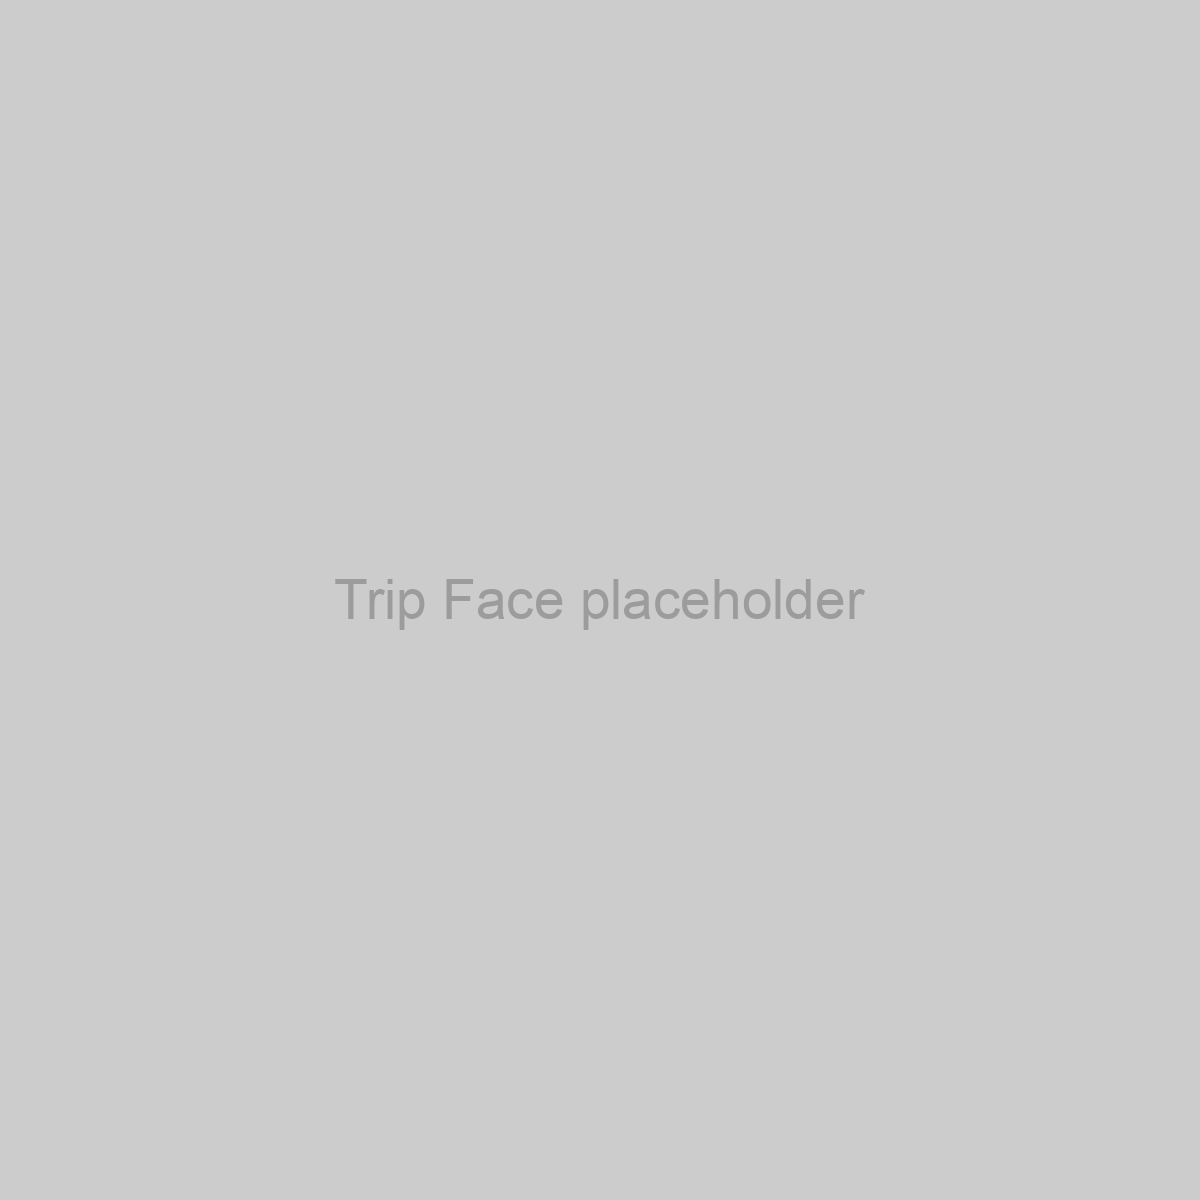 Trip Face Placeholder Image